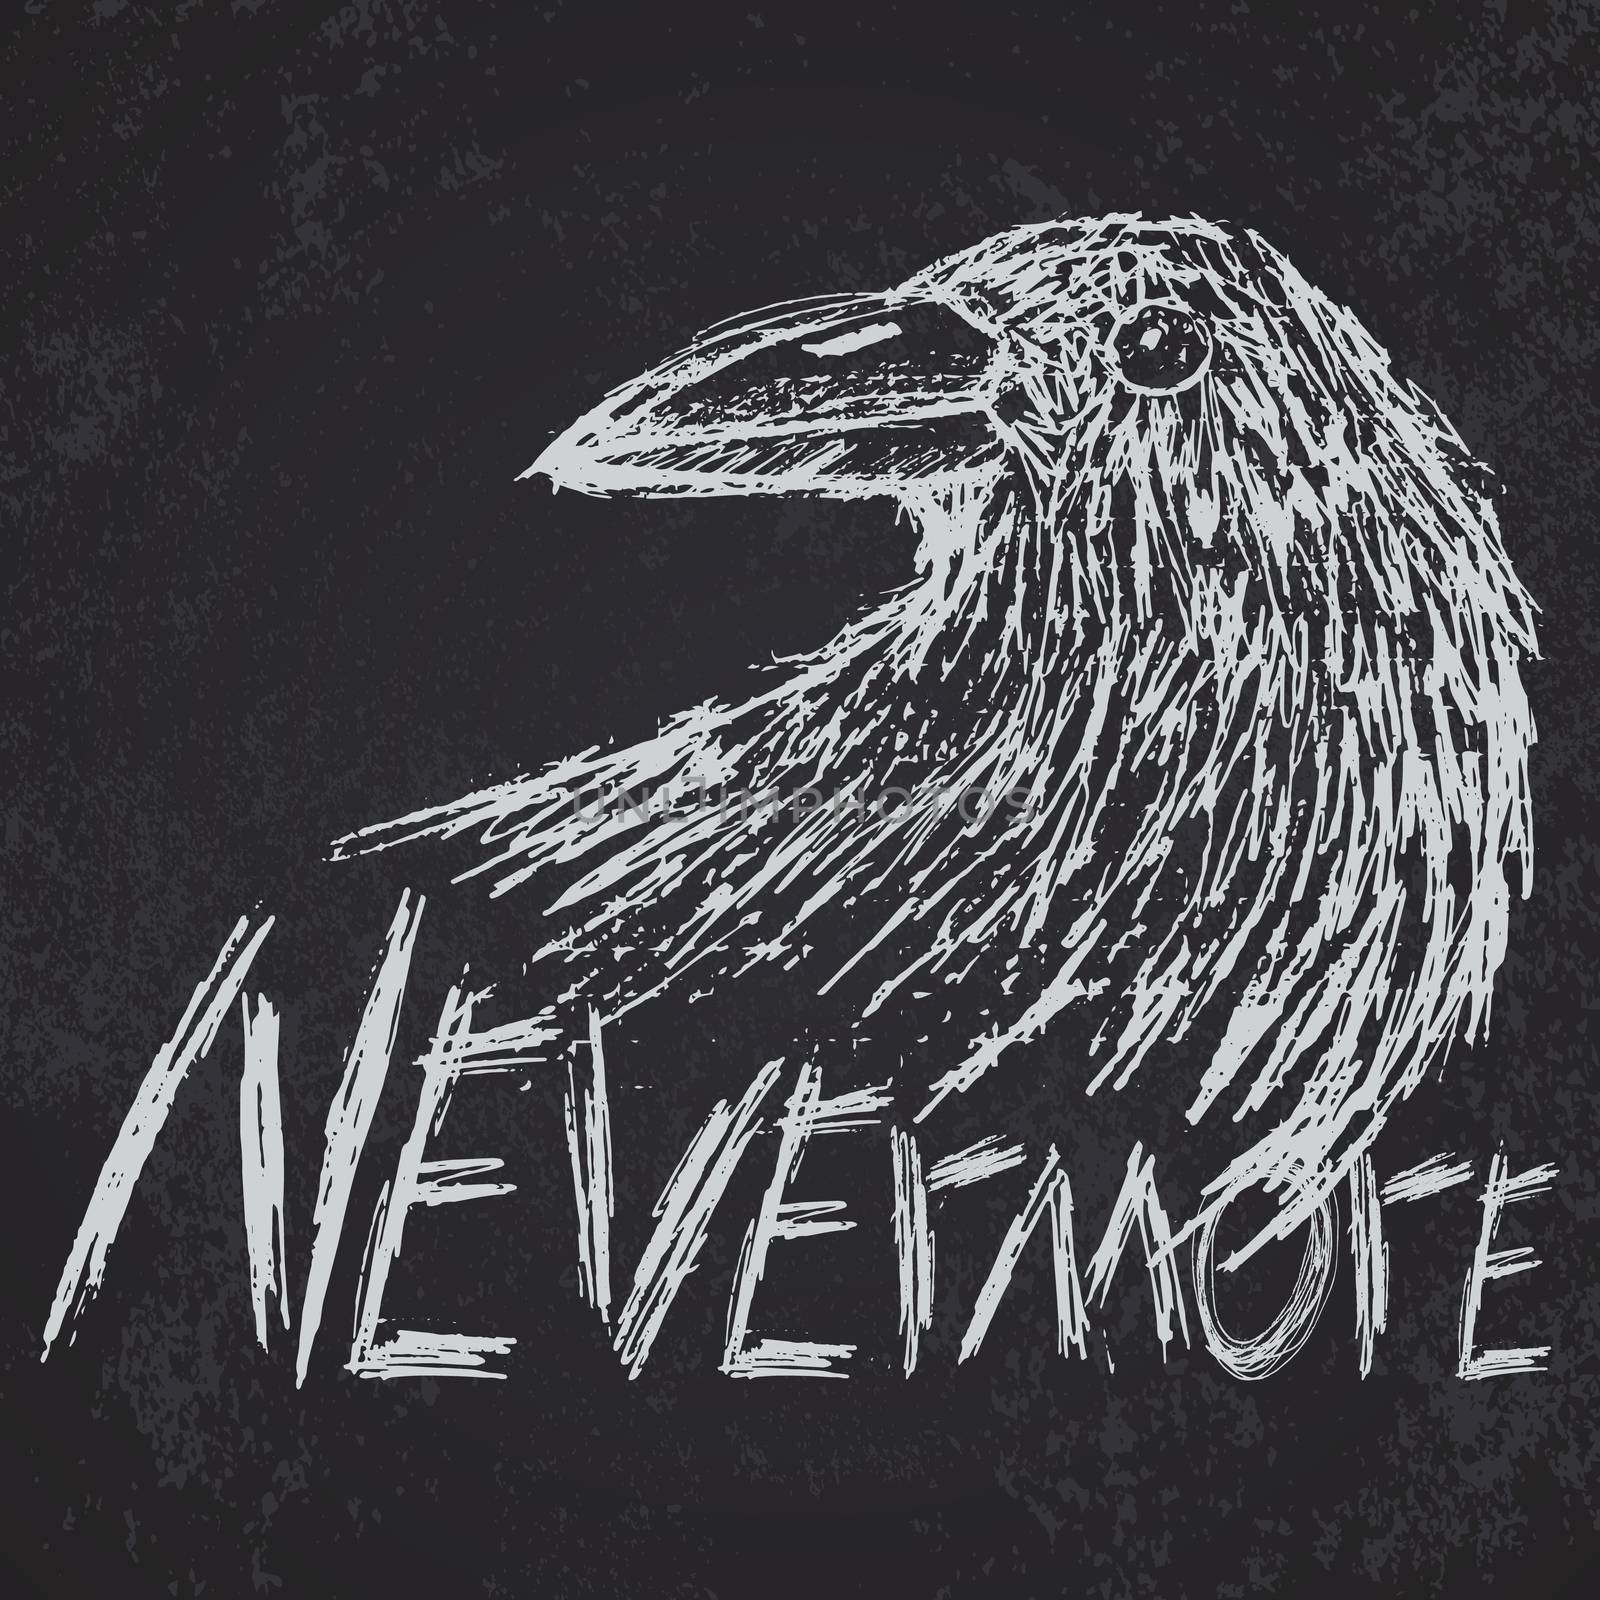 Crow raven handdrawn sketch text nevermore on blackboard.